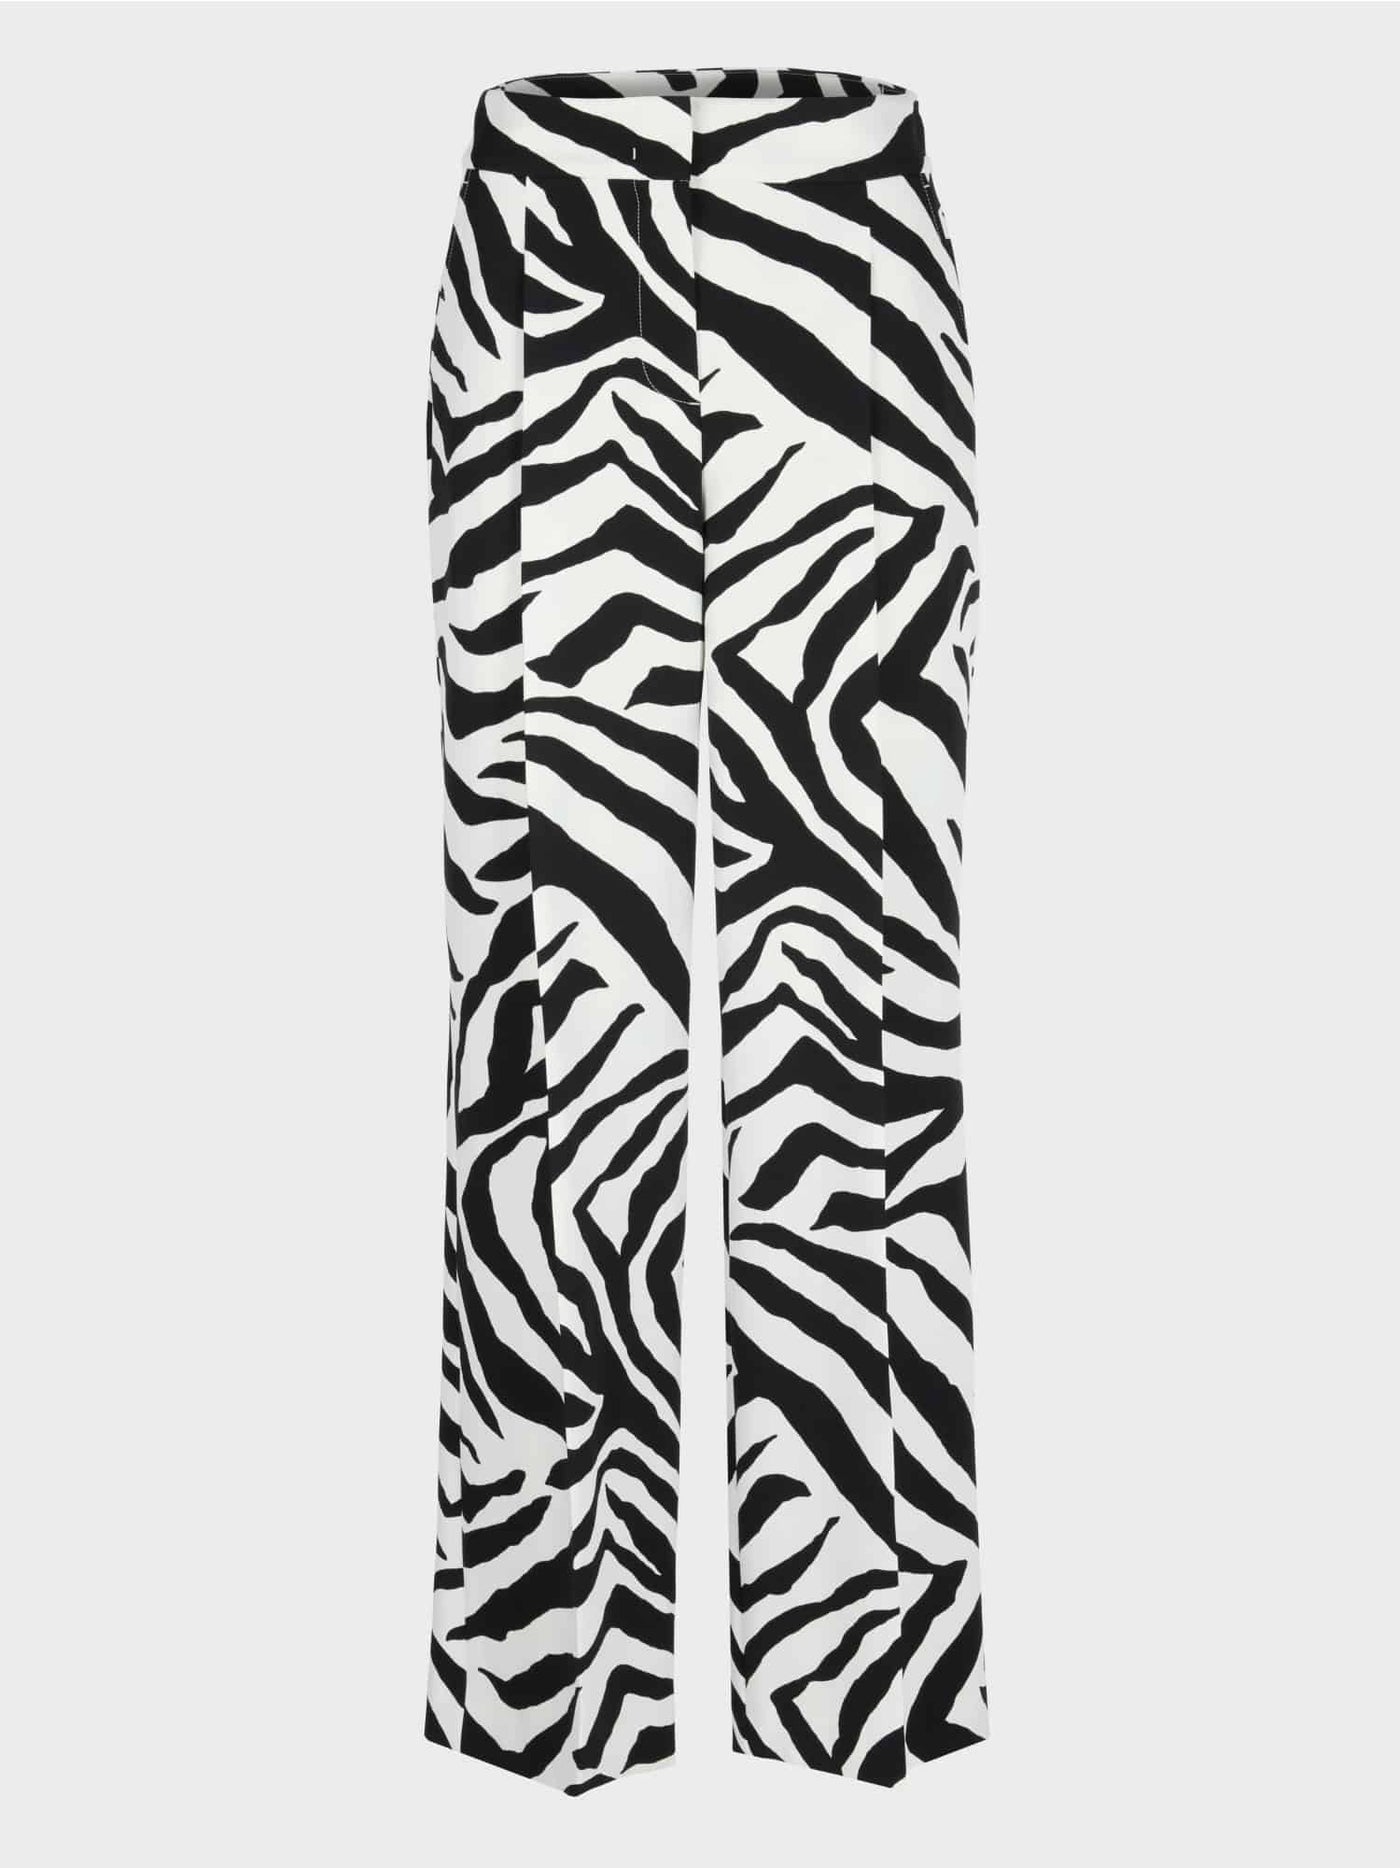 Marc Cain Pants in a zebra design